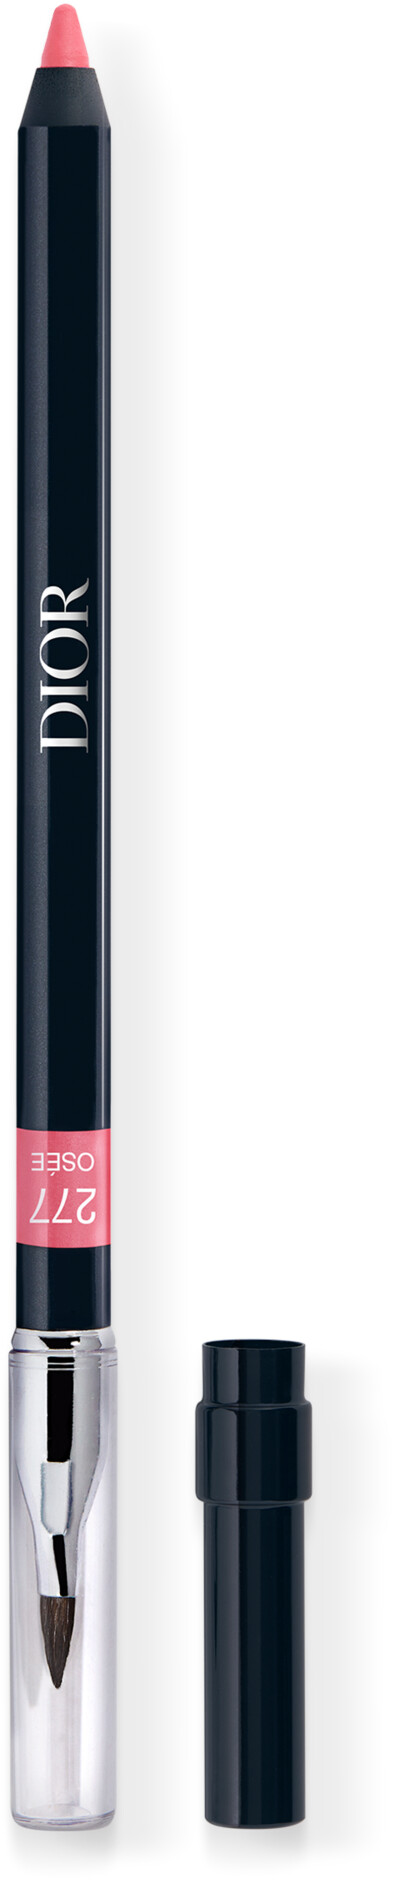 DIOR Rouge Dior Contour Lip Liner Pencil 1.2g 277 - Osee